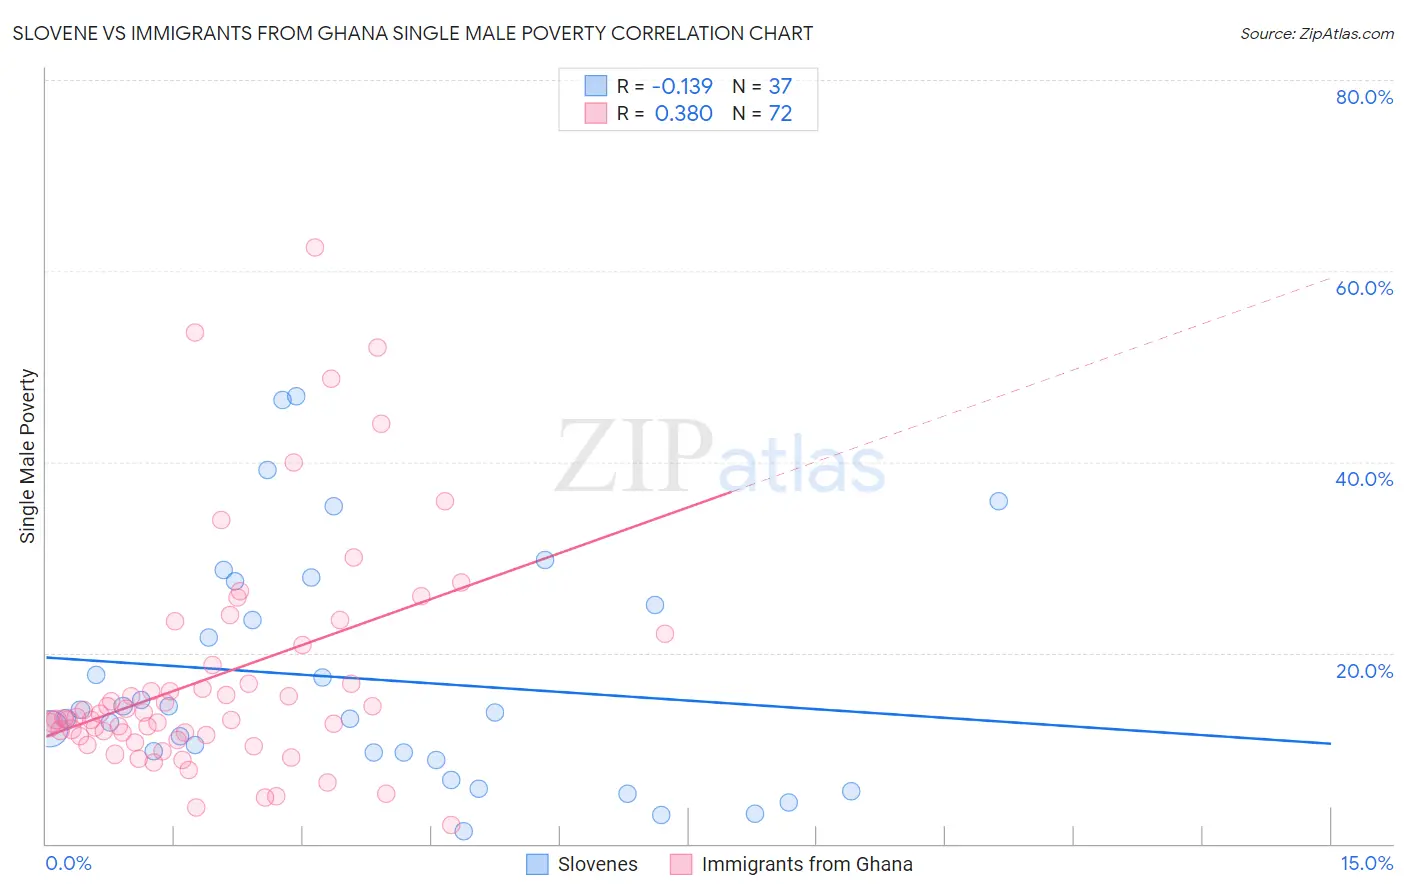 Slovene vs Immigrants from Ghana Single Male Poverty